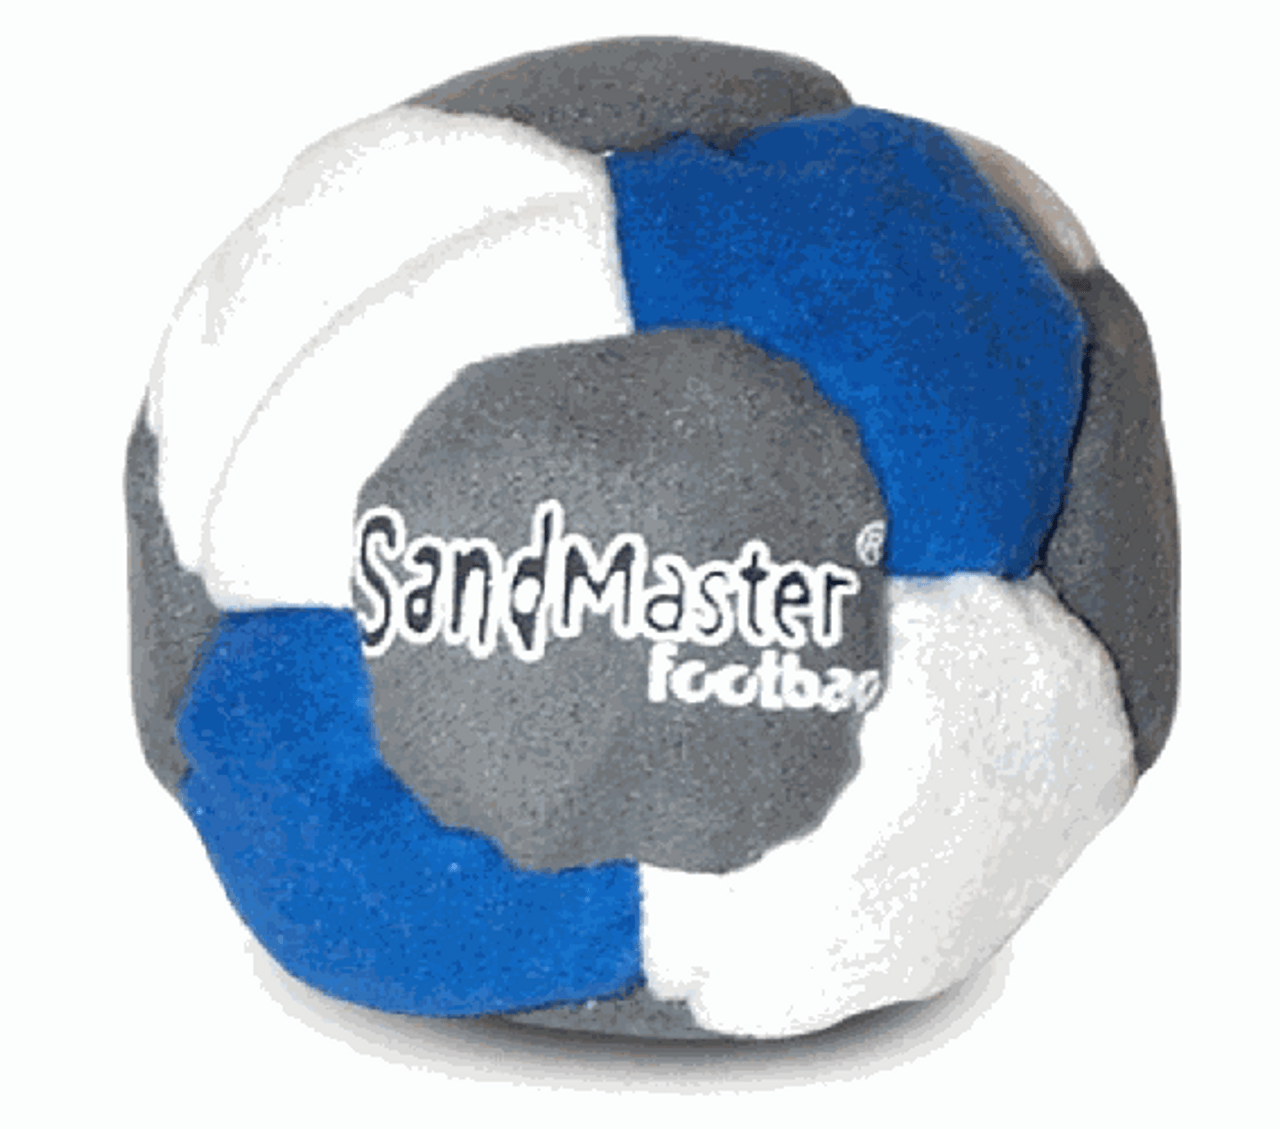 Sandmaster Various Colors Foot Bag